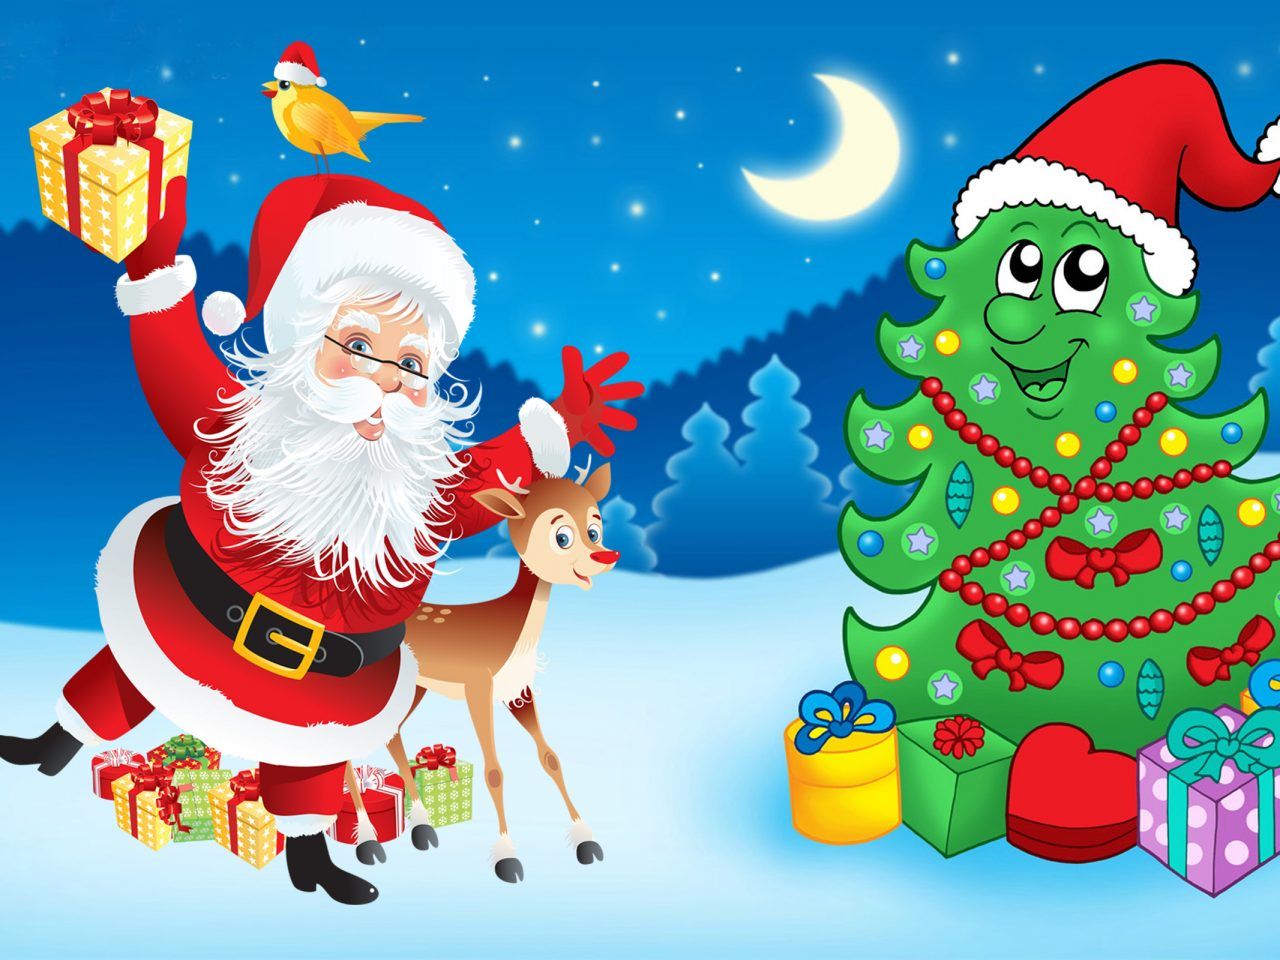 Santa Claus Christmas Tree Decorations Gifts Cartoon Christmas Wallpaper HD 2560x1600 1280x960